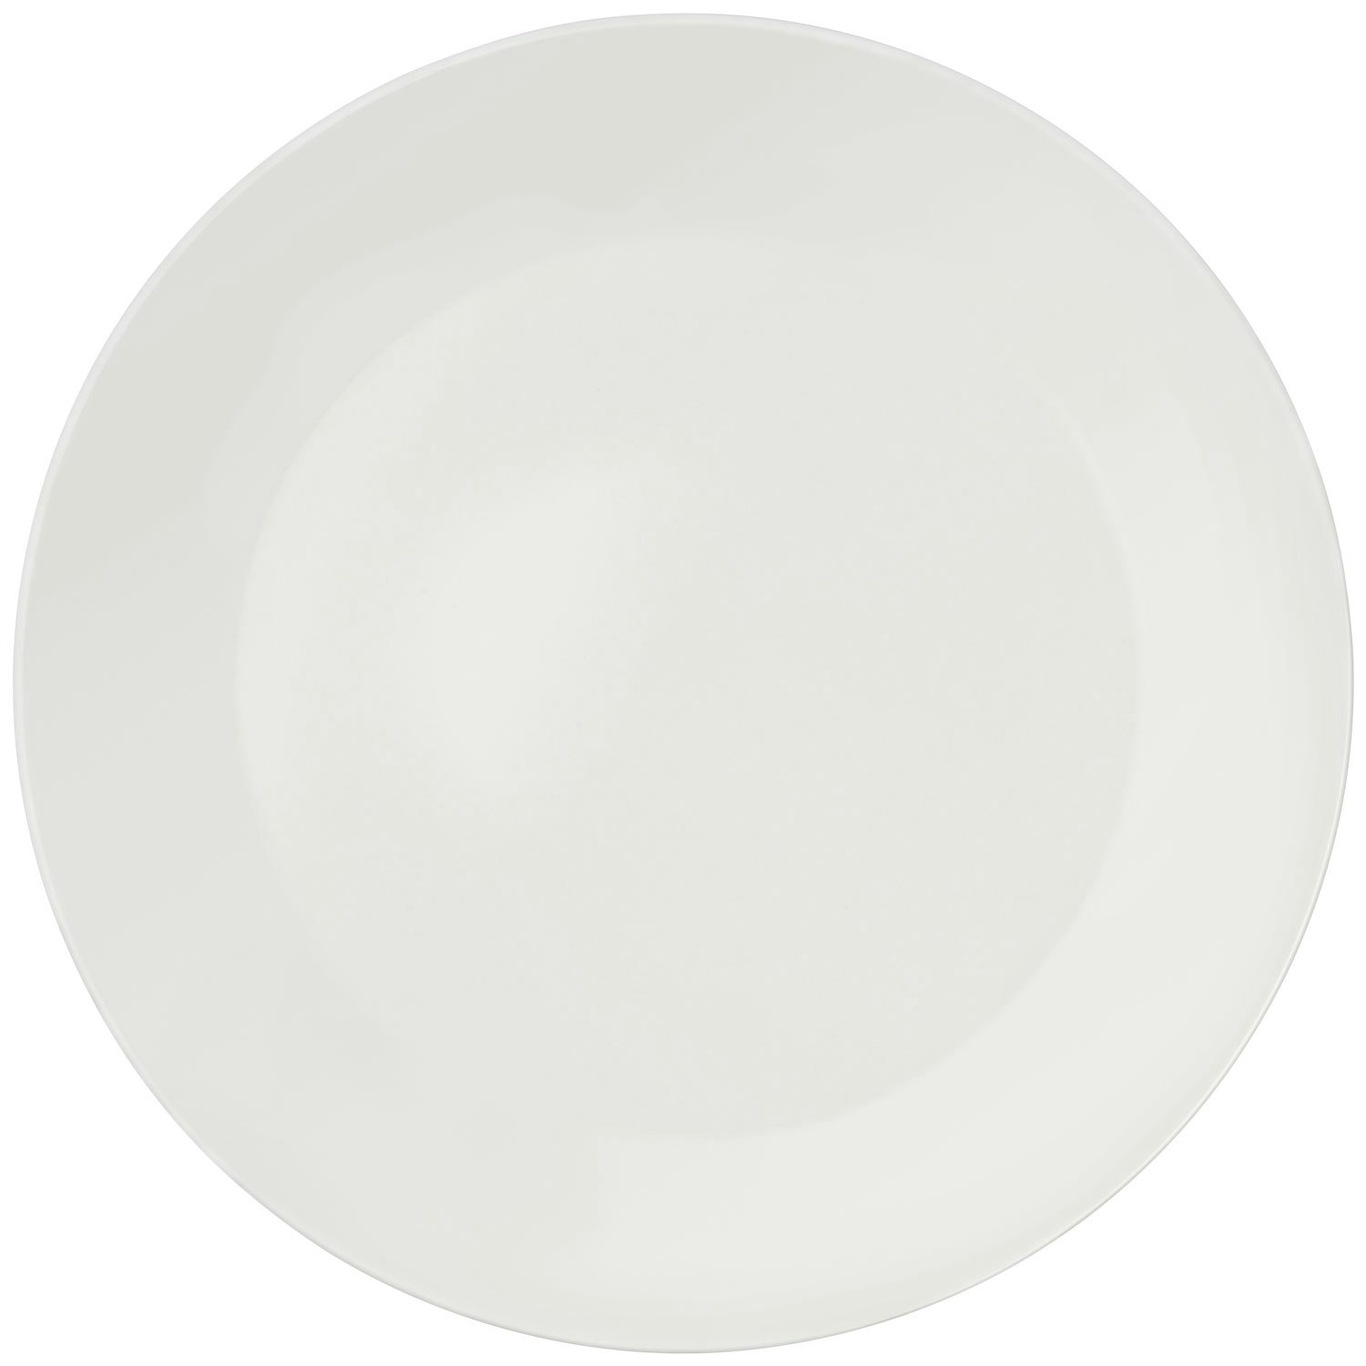 Mainio Plate White, 25 cm